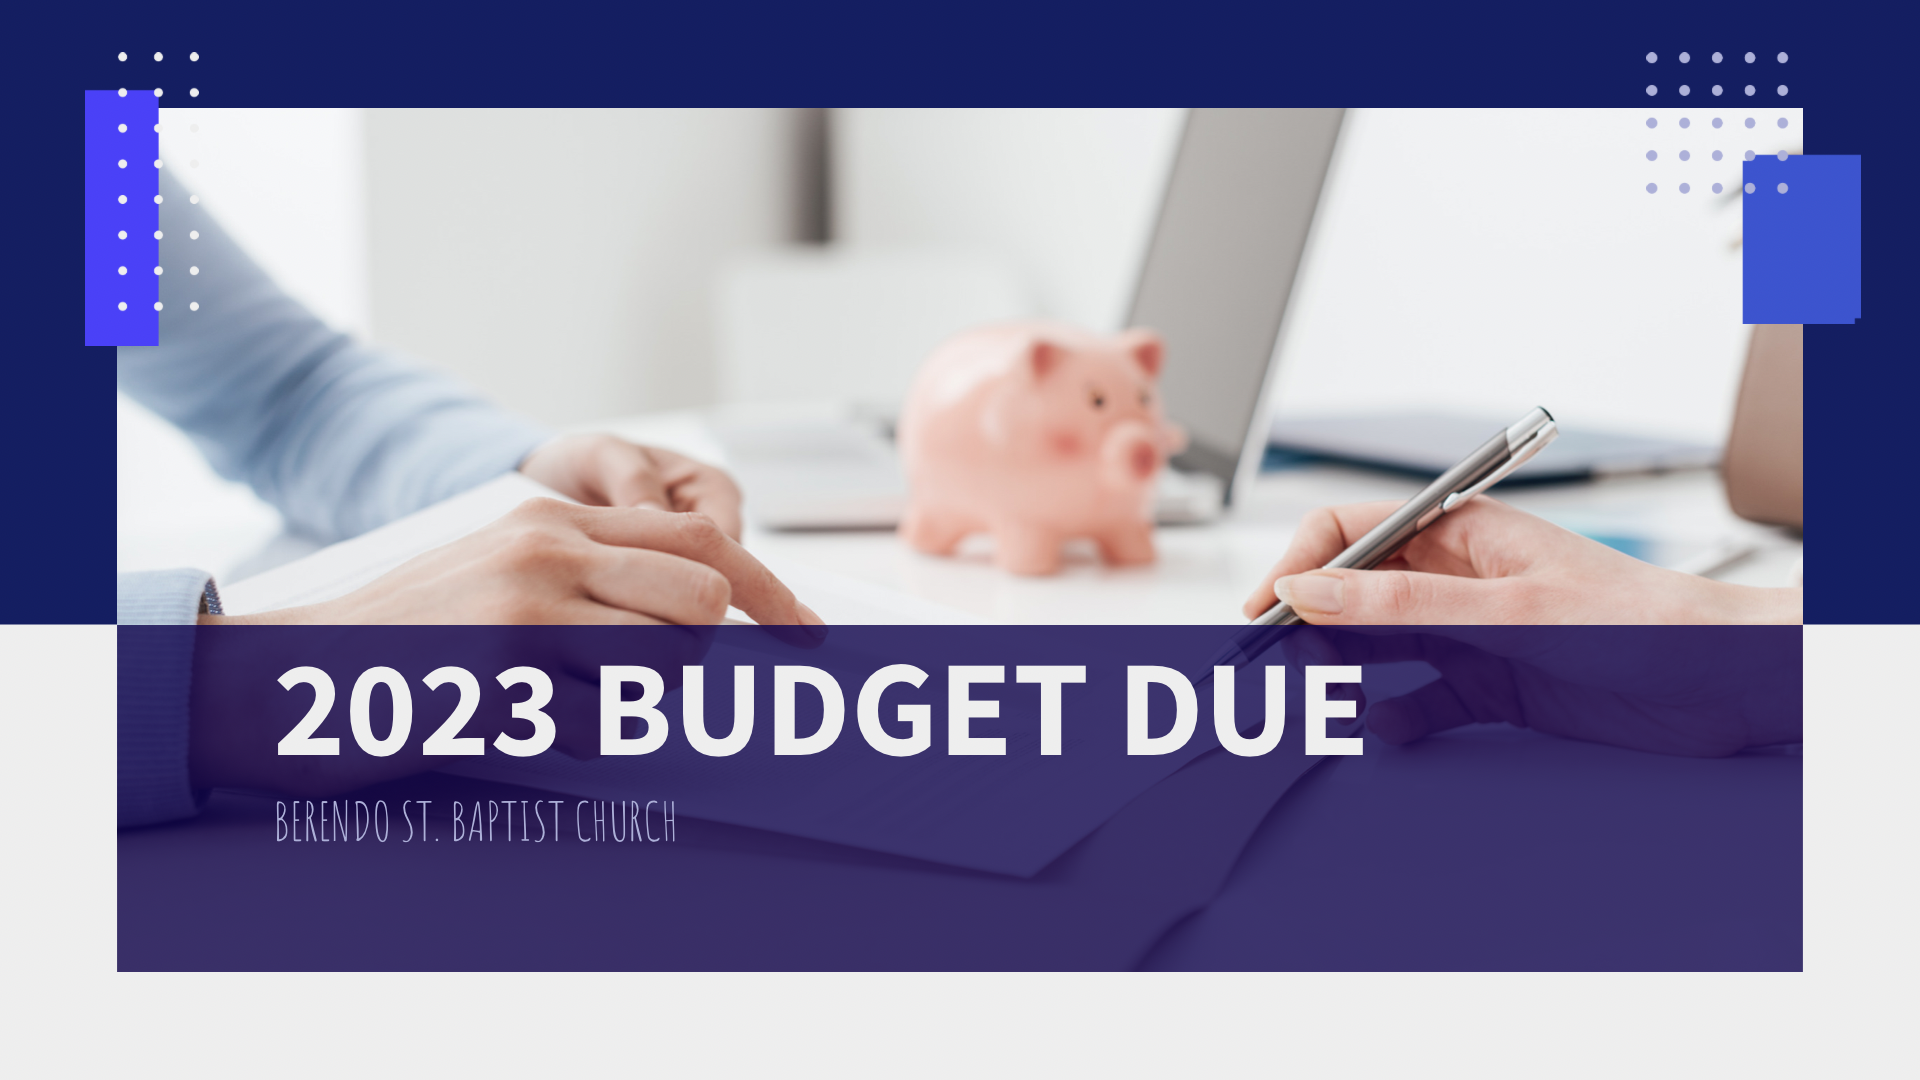 2023 Budget Due image